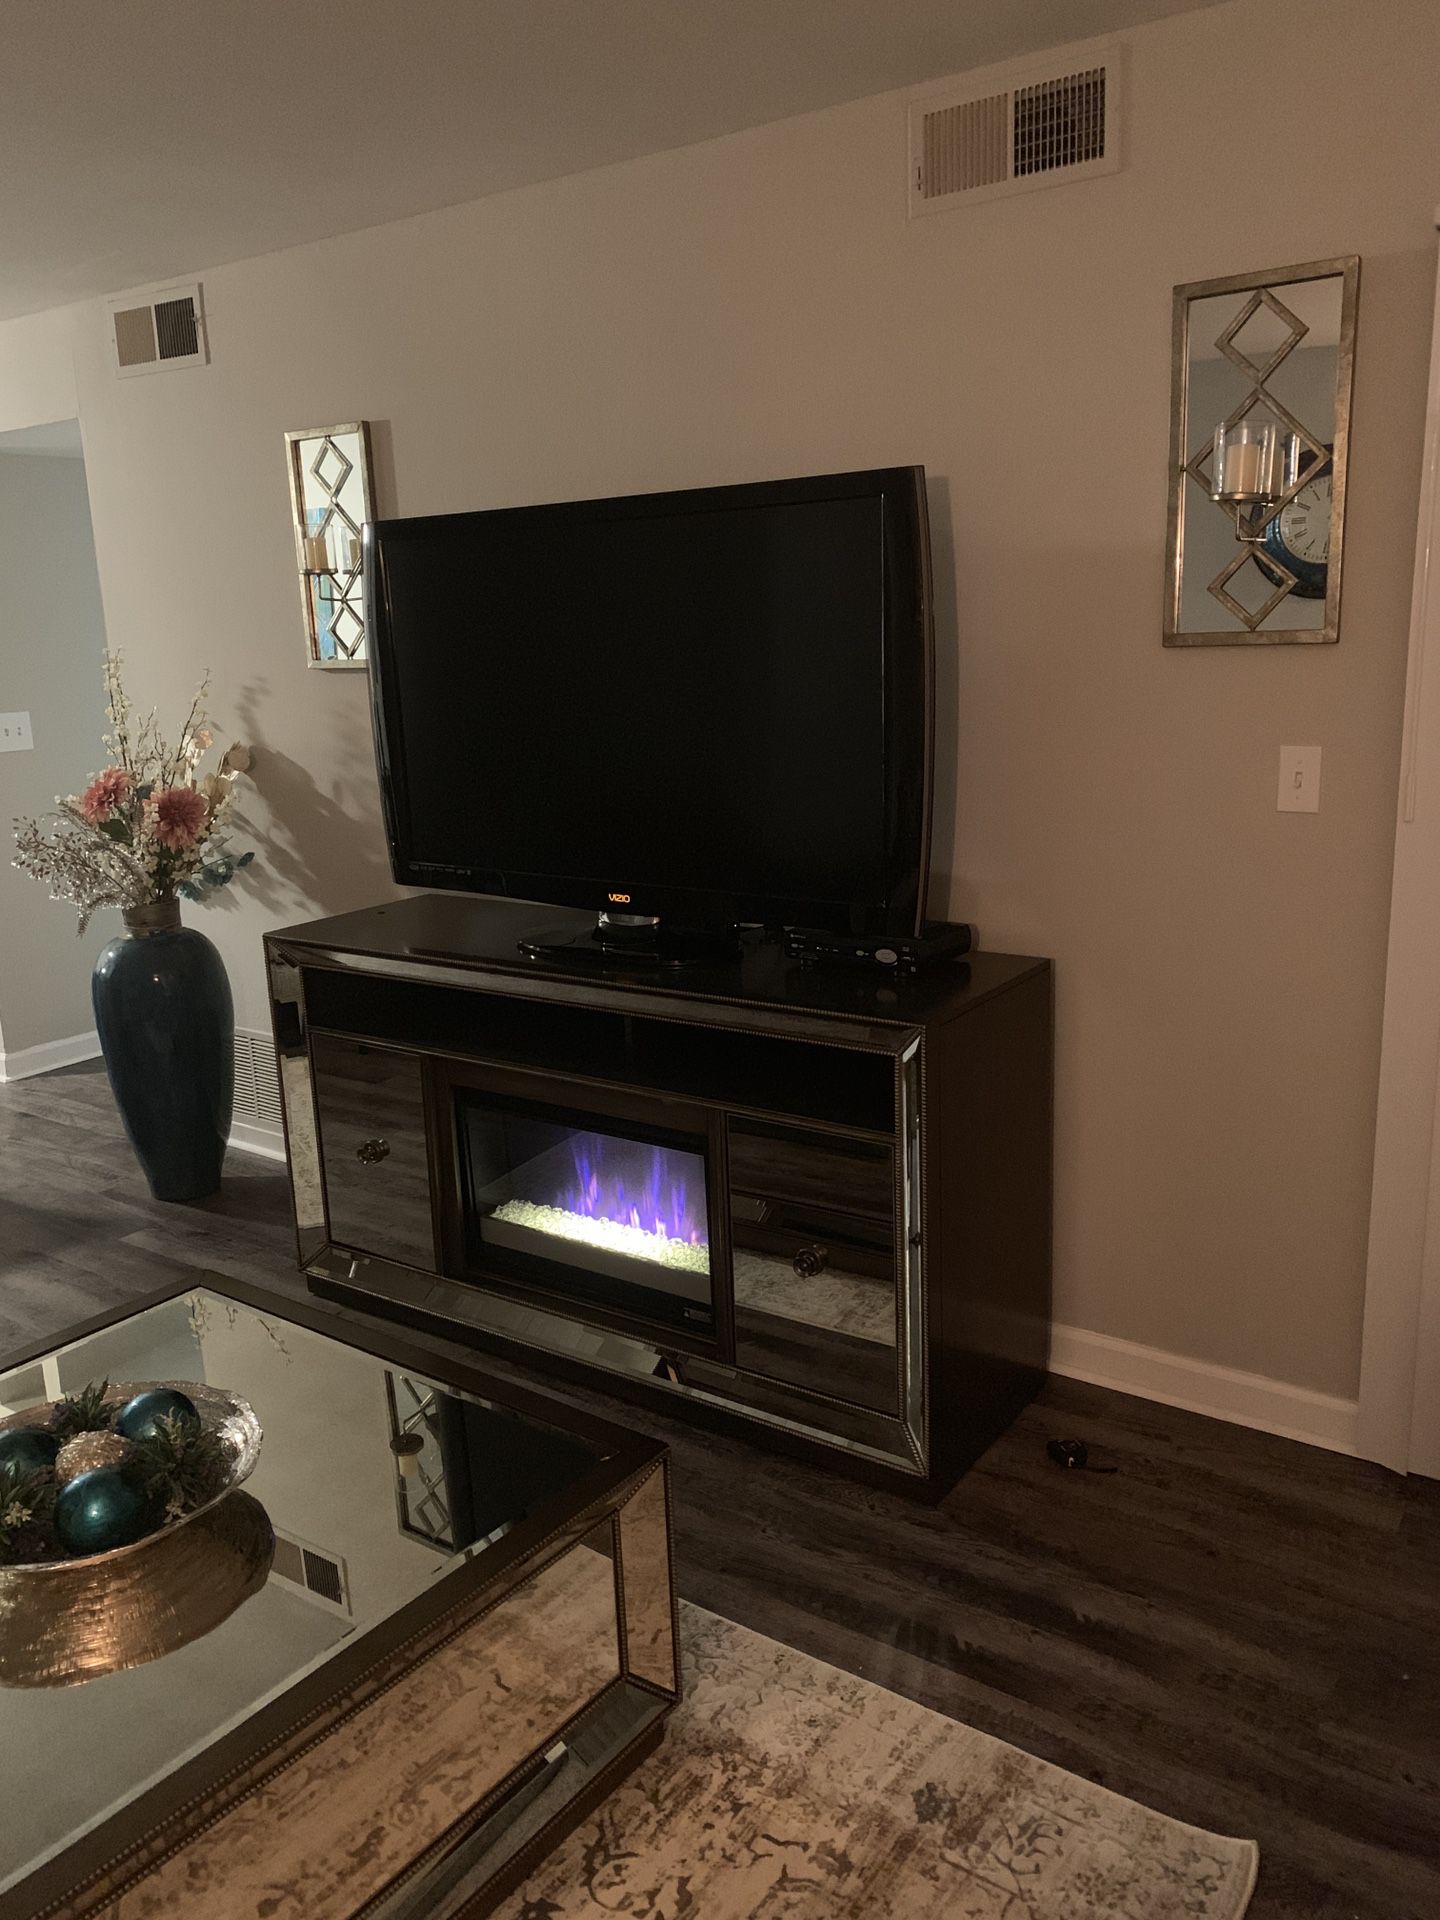 Mirrored TV Console w/ decorative fireplace 